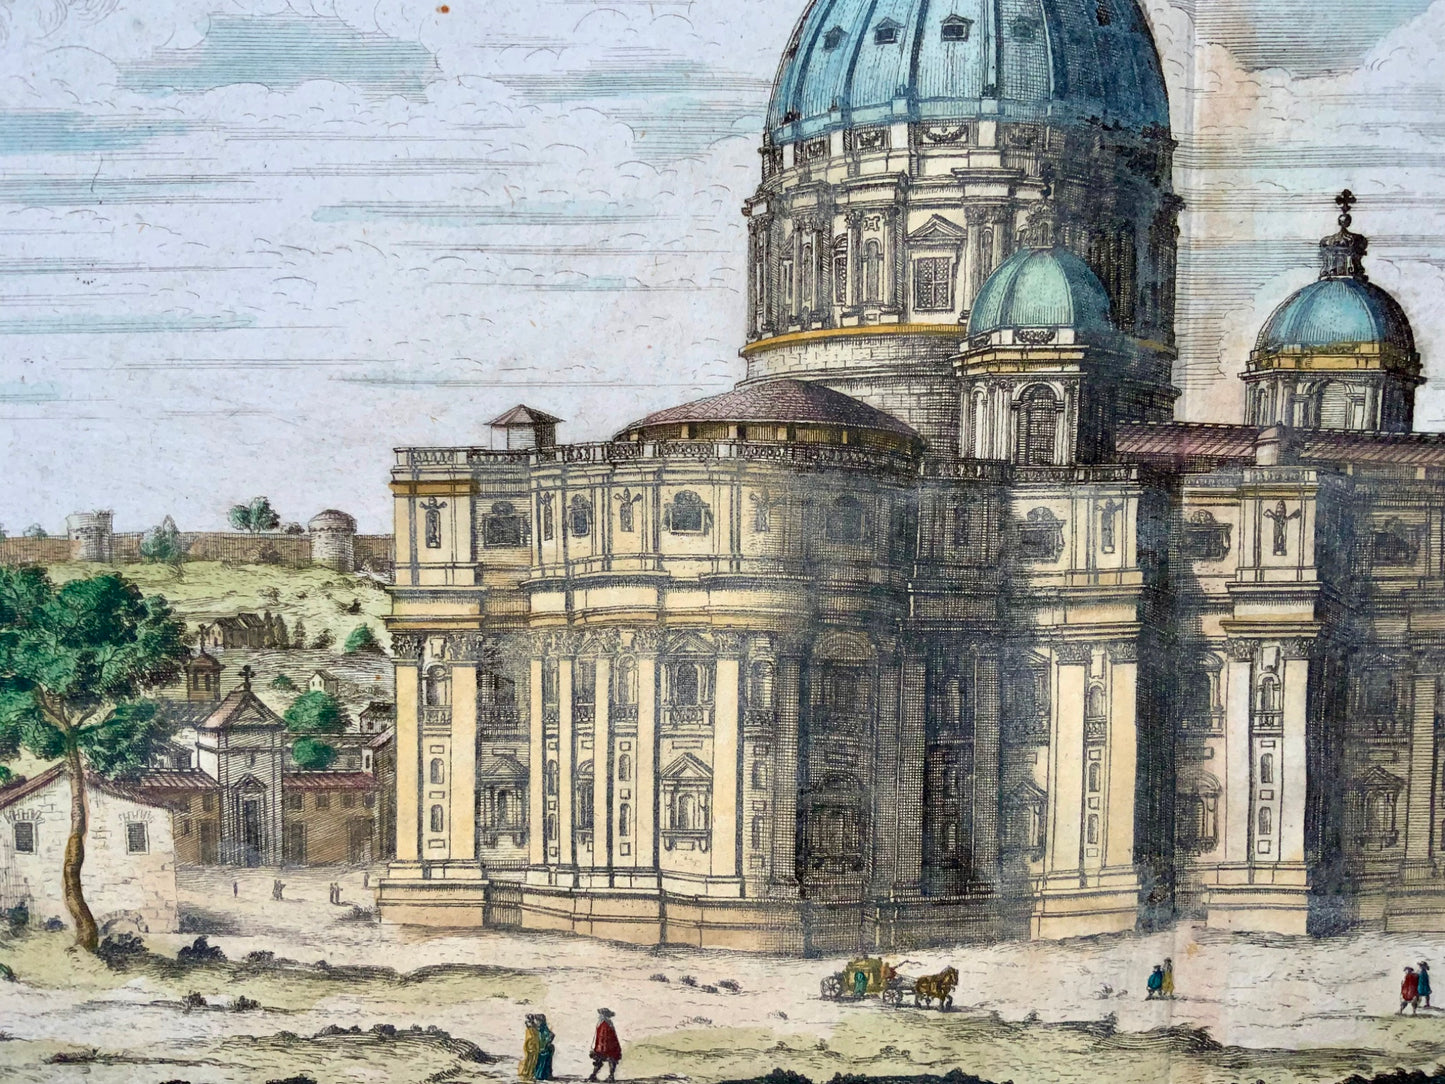 1679 St. Peter’s, Vatican, Rome, Italy, von Sandrart, hand colored double folio